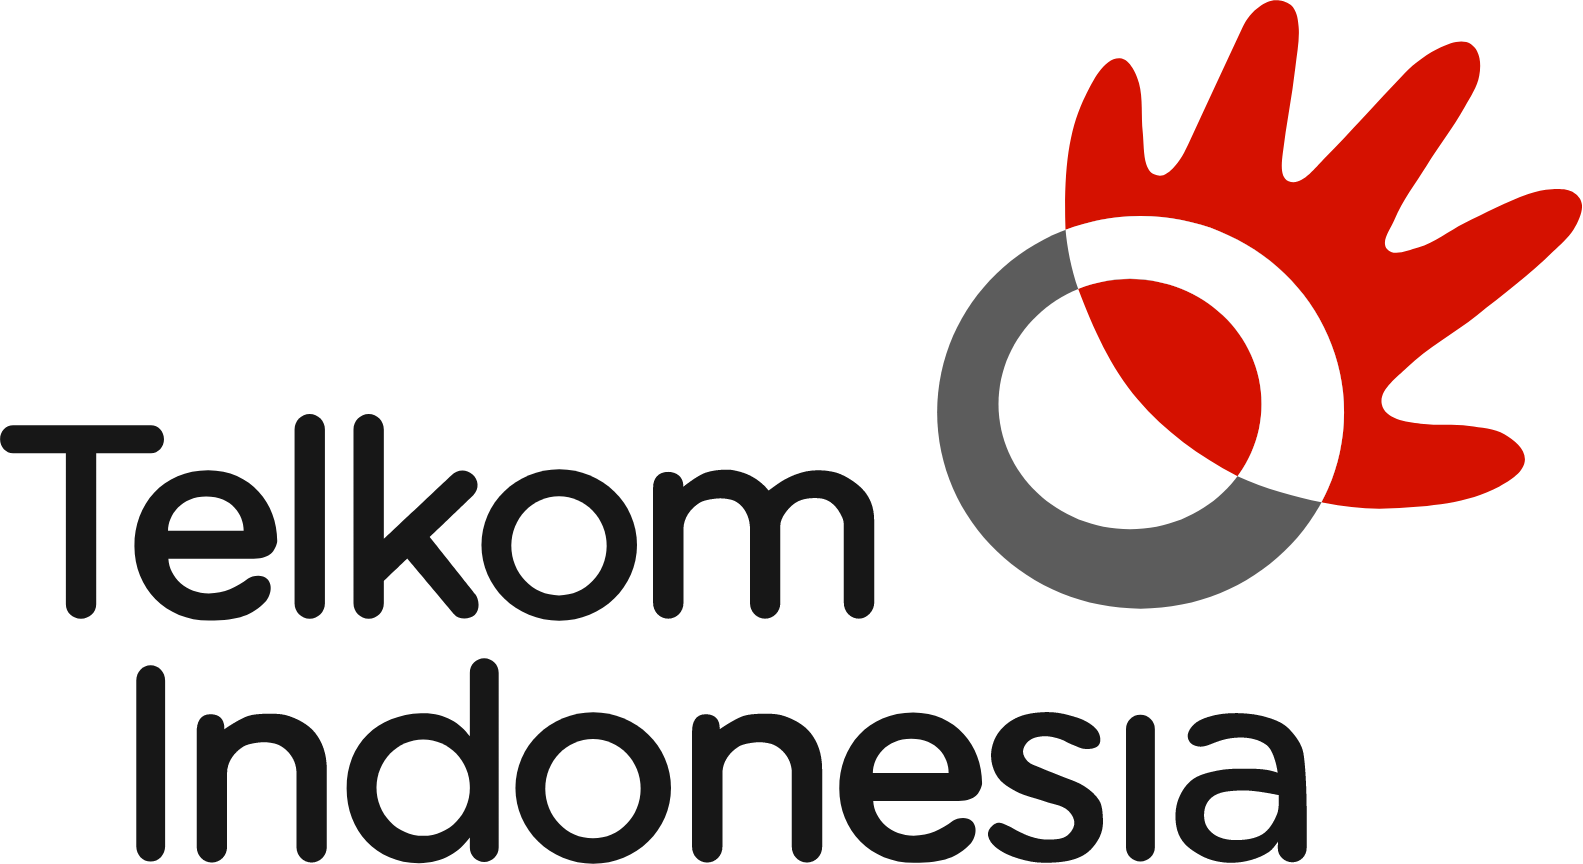 Telkom Indonesia logo large (transparent PNG)